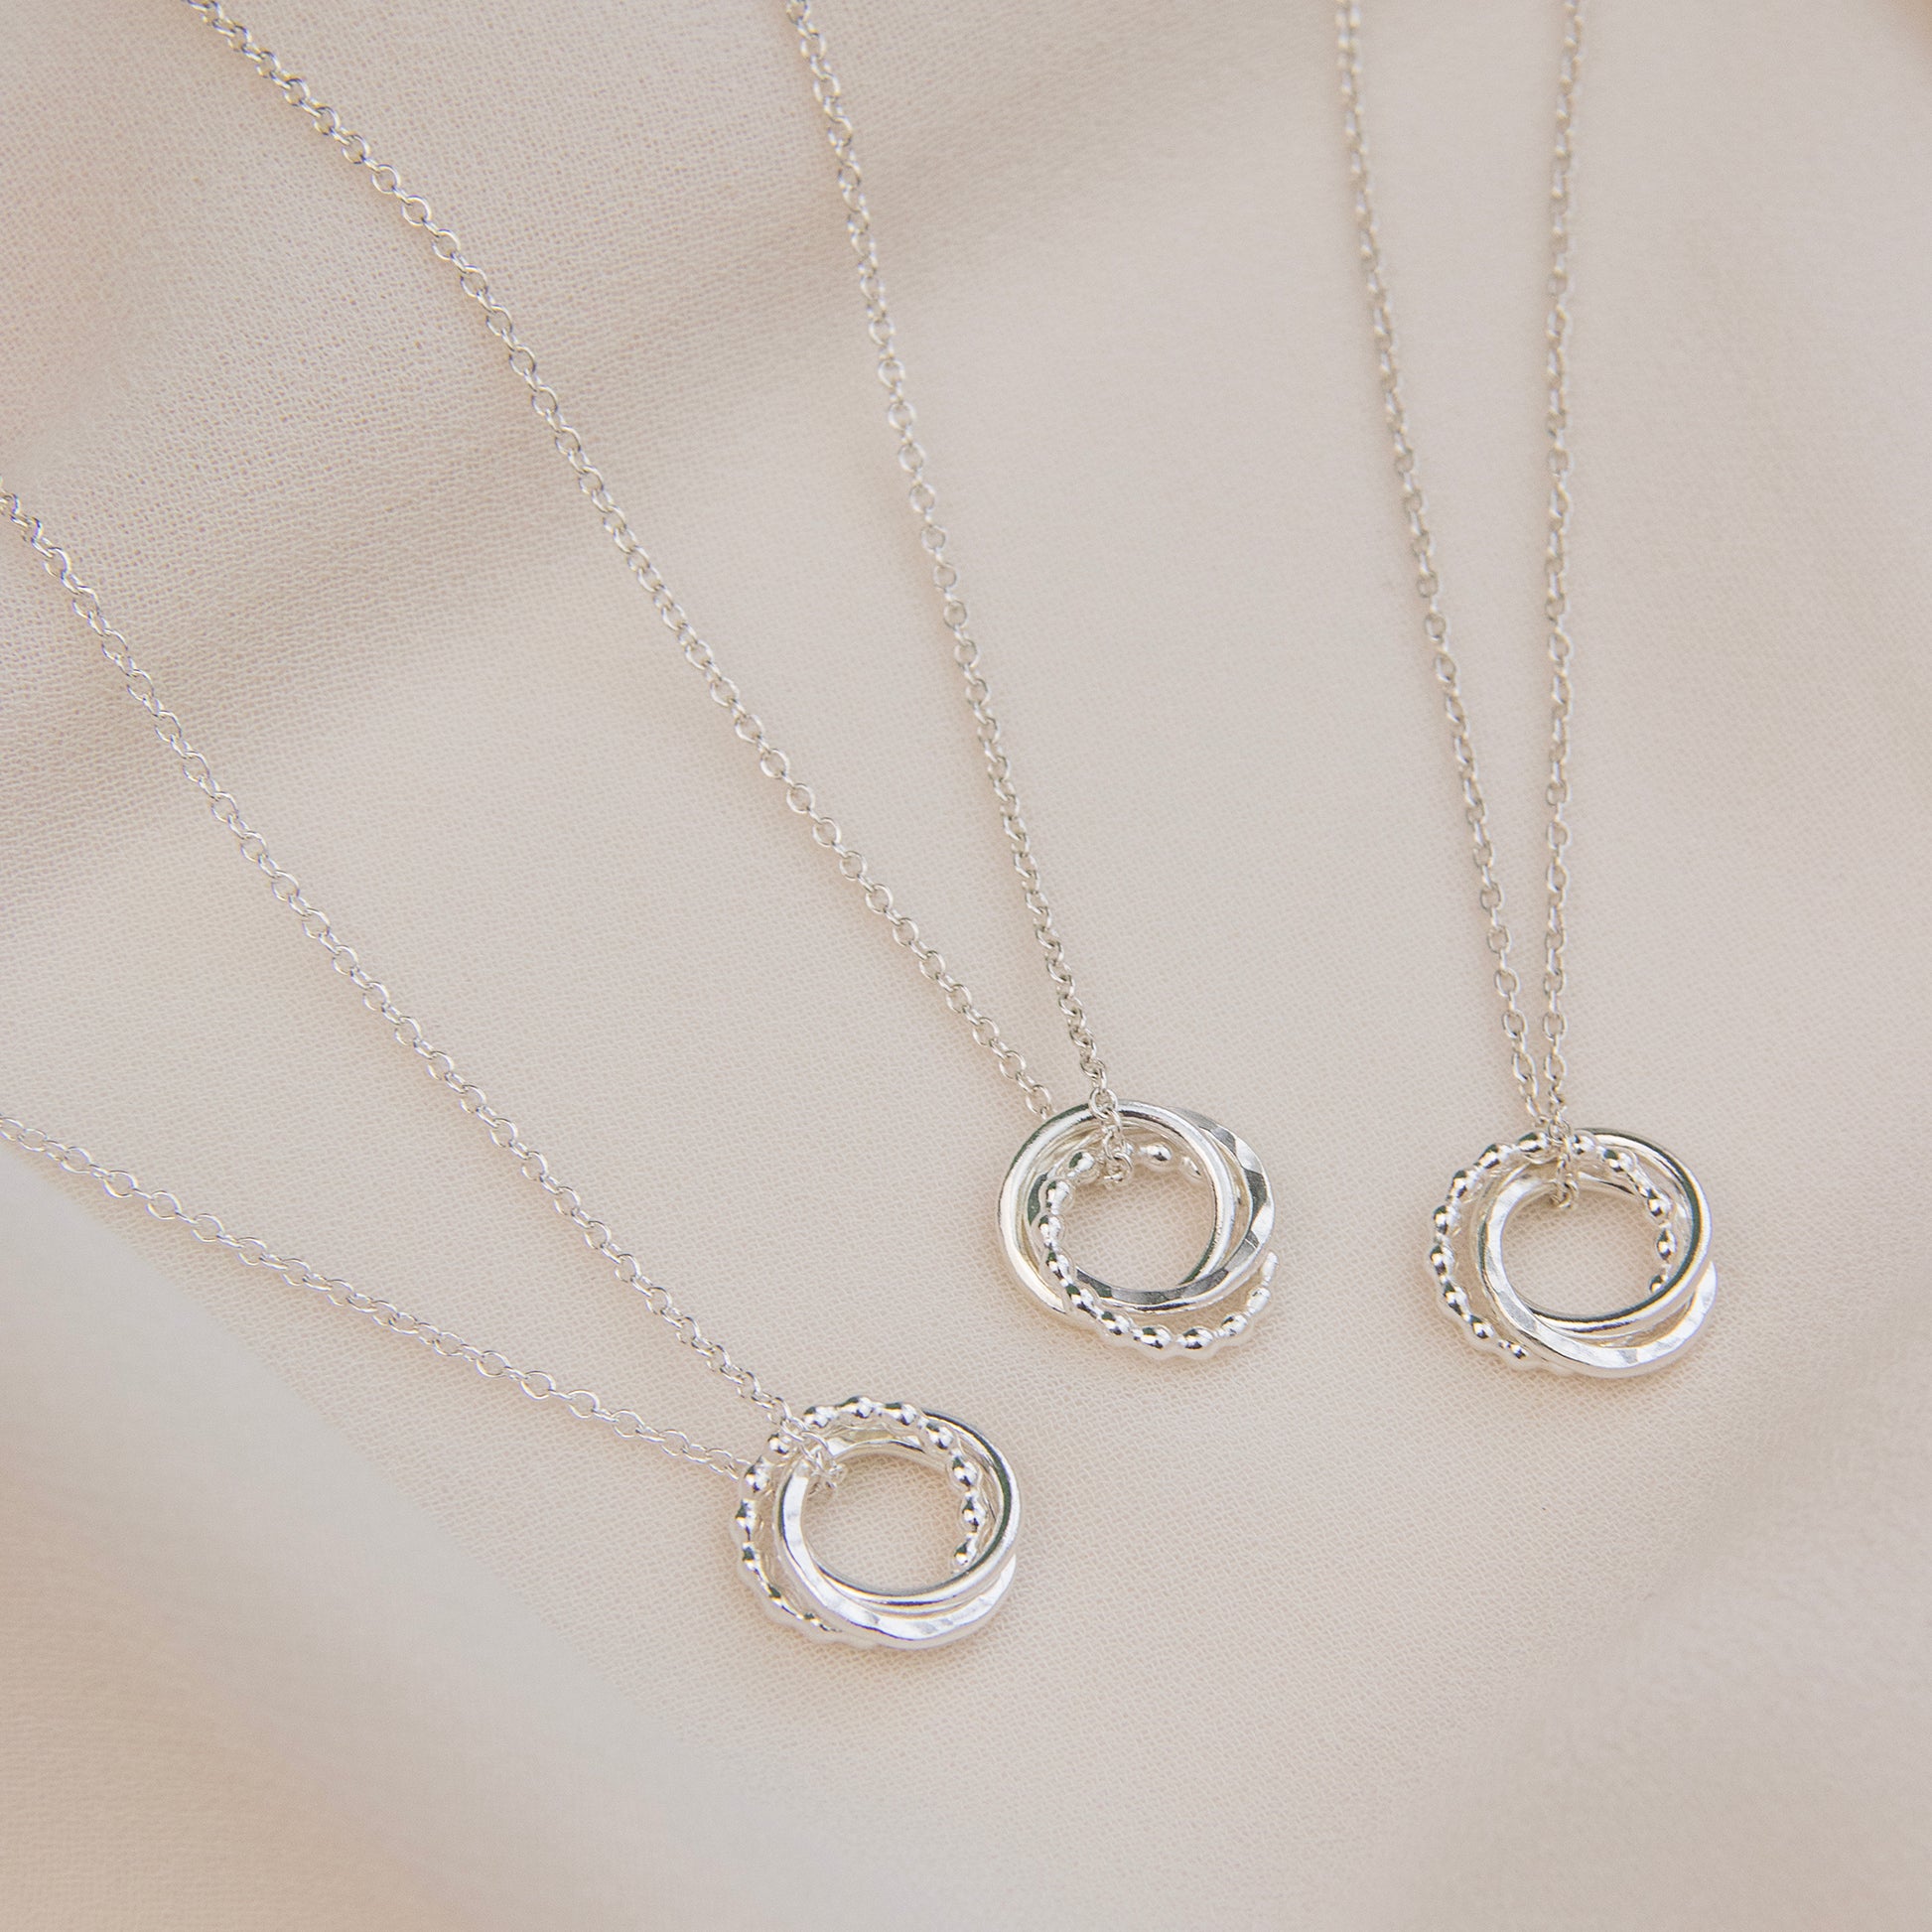 Bride & Bridesmaids Necklaces Matching Set - Silver Love Knot Necklaces